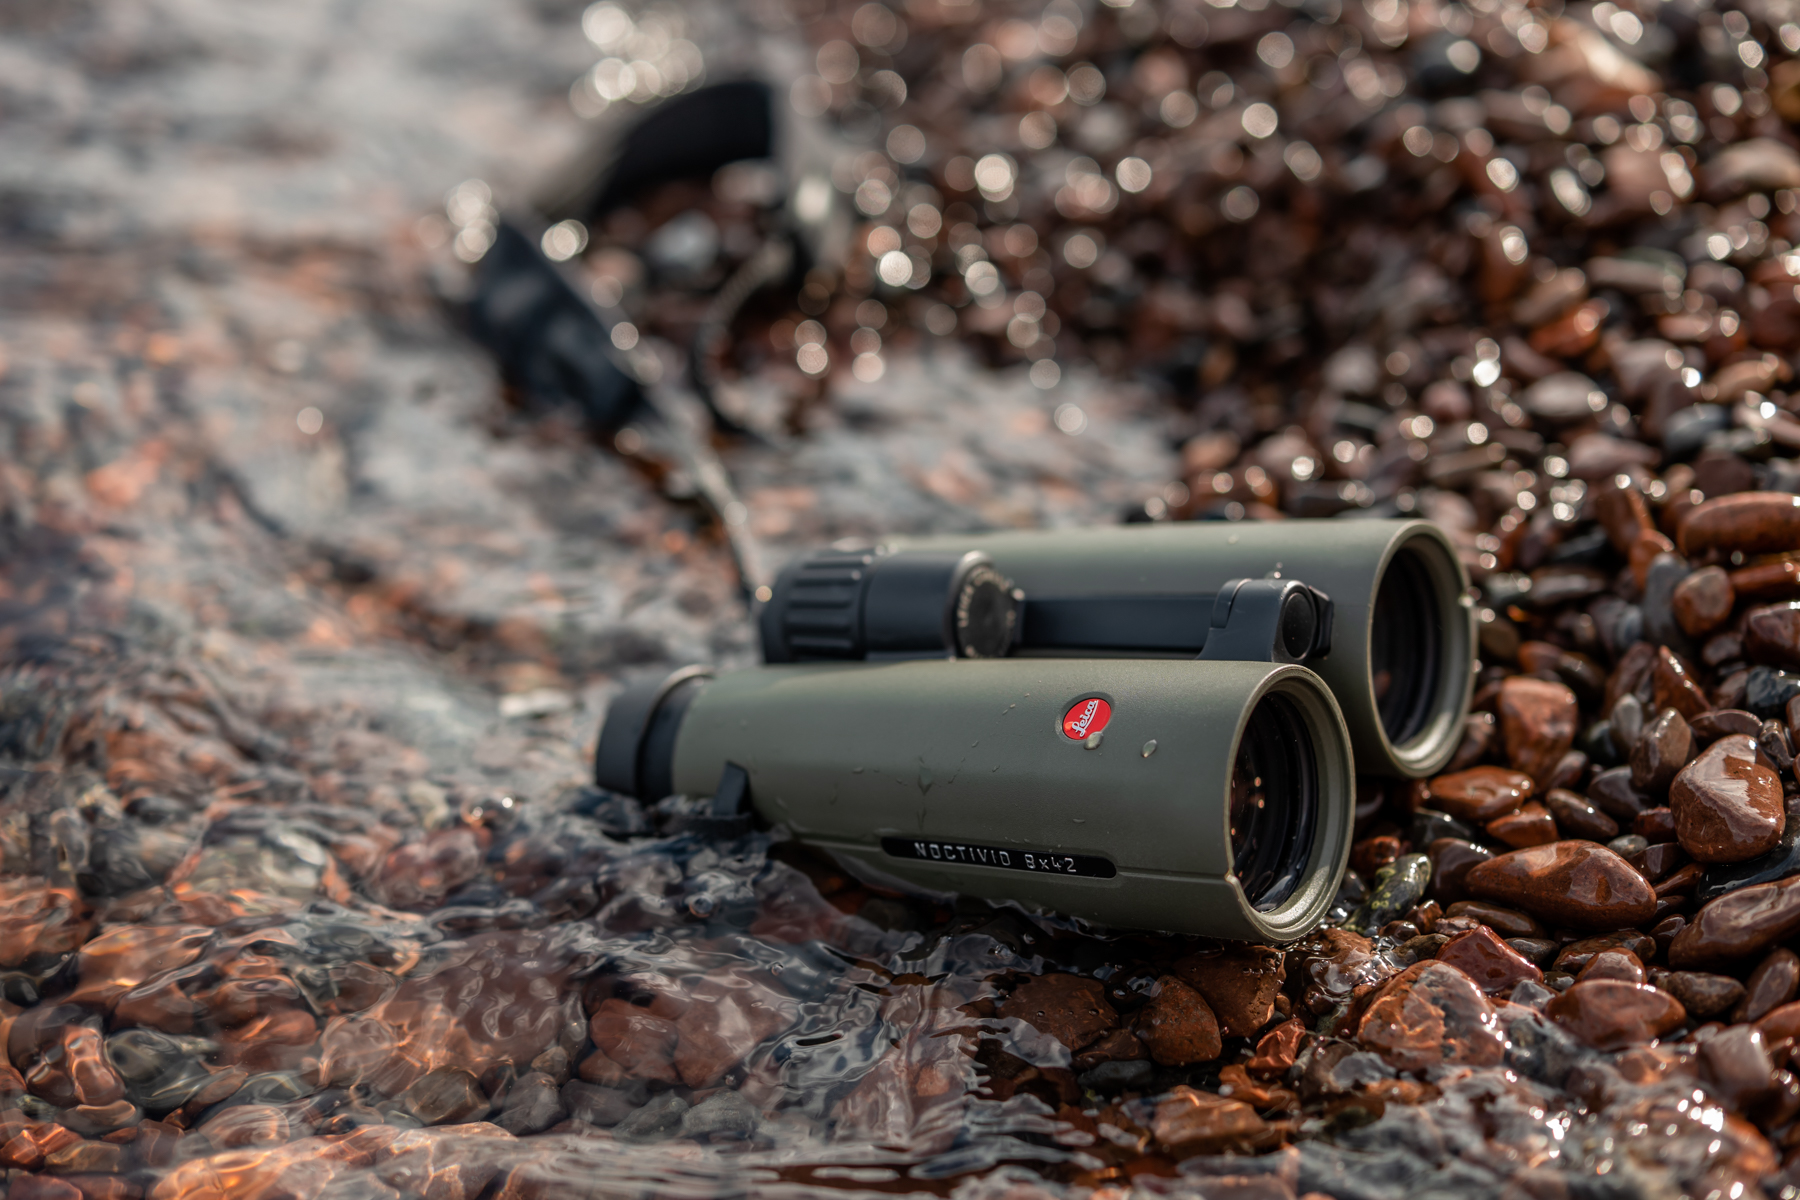 Leica binoculars in water